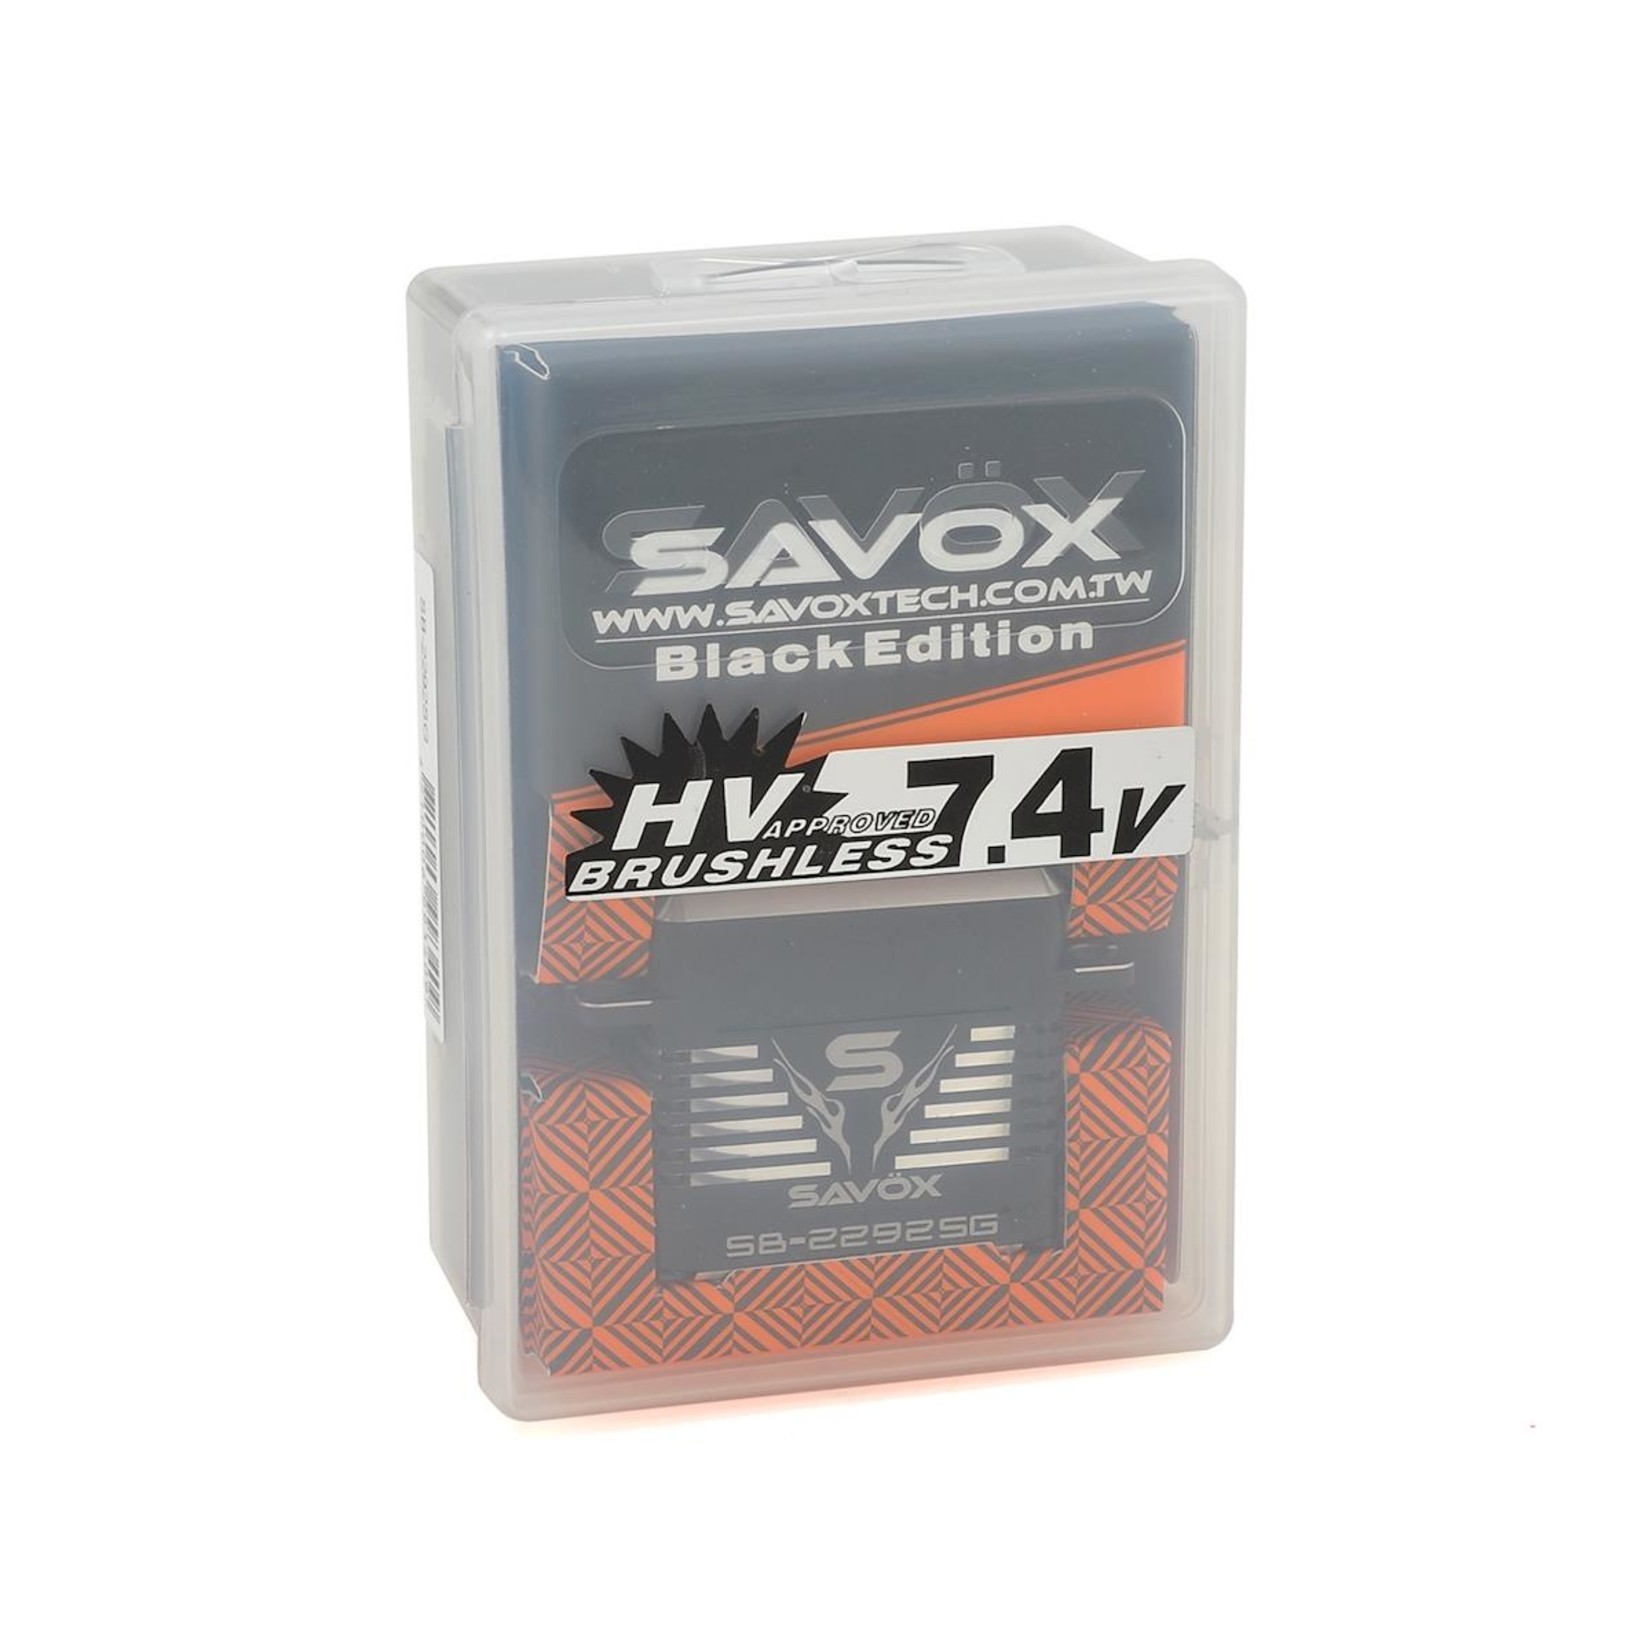 Savox Savox Black Edition Monster Torque Brushless Steel Gear Servo (High Voltage) #SB-2292SG